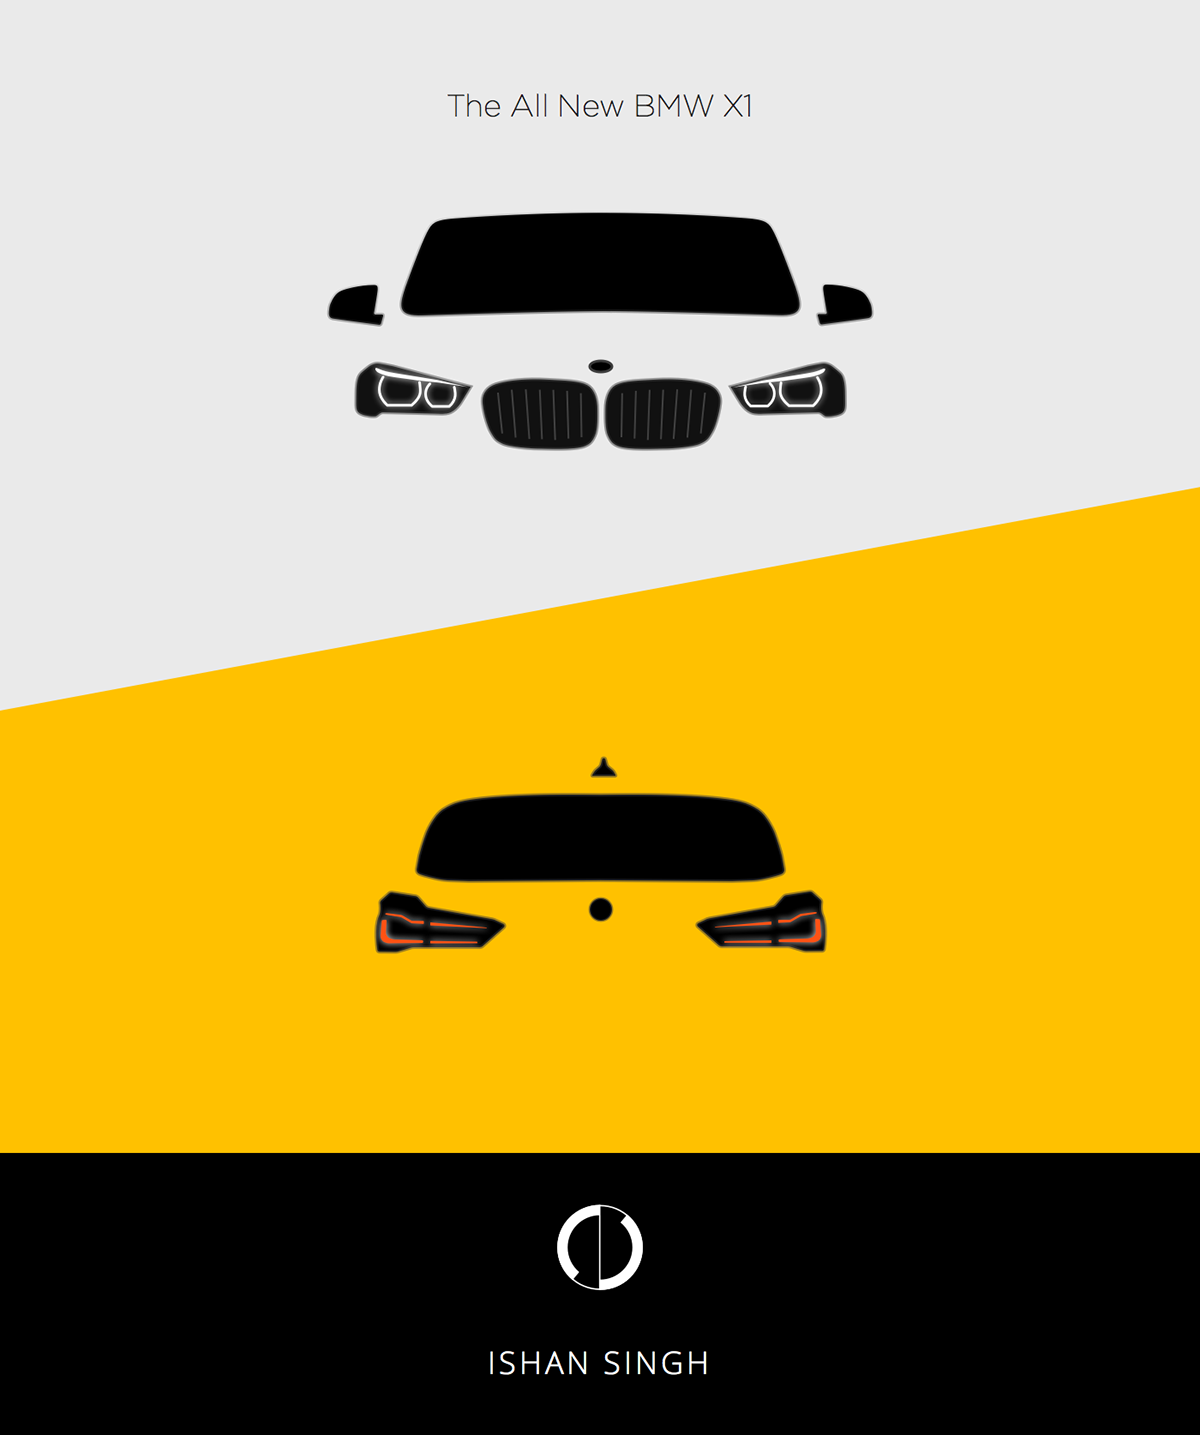 BMW X1 inspiration quick work automobile Auto Art enthusiast car minimal design